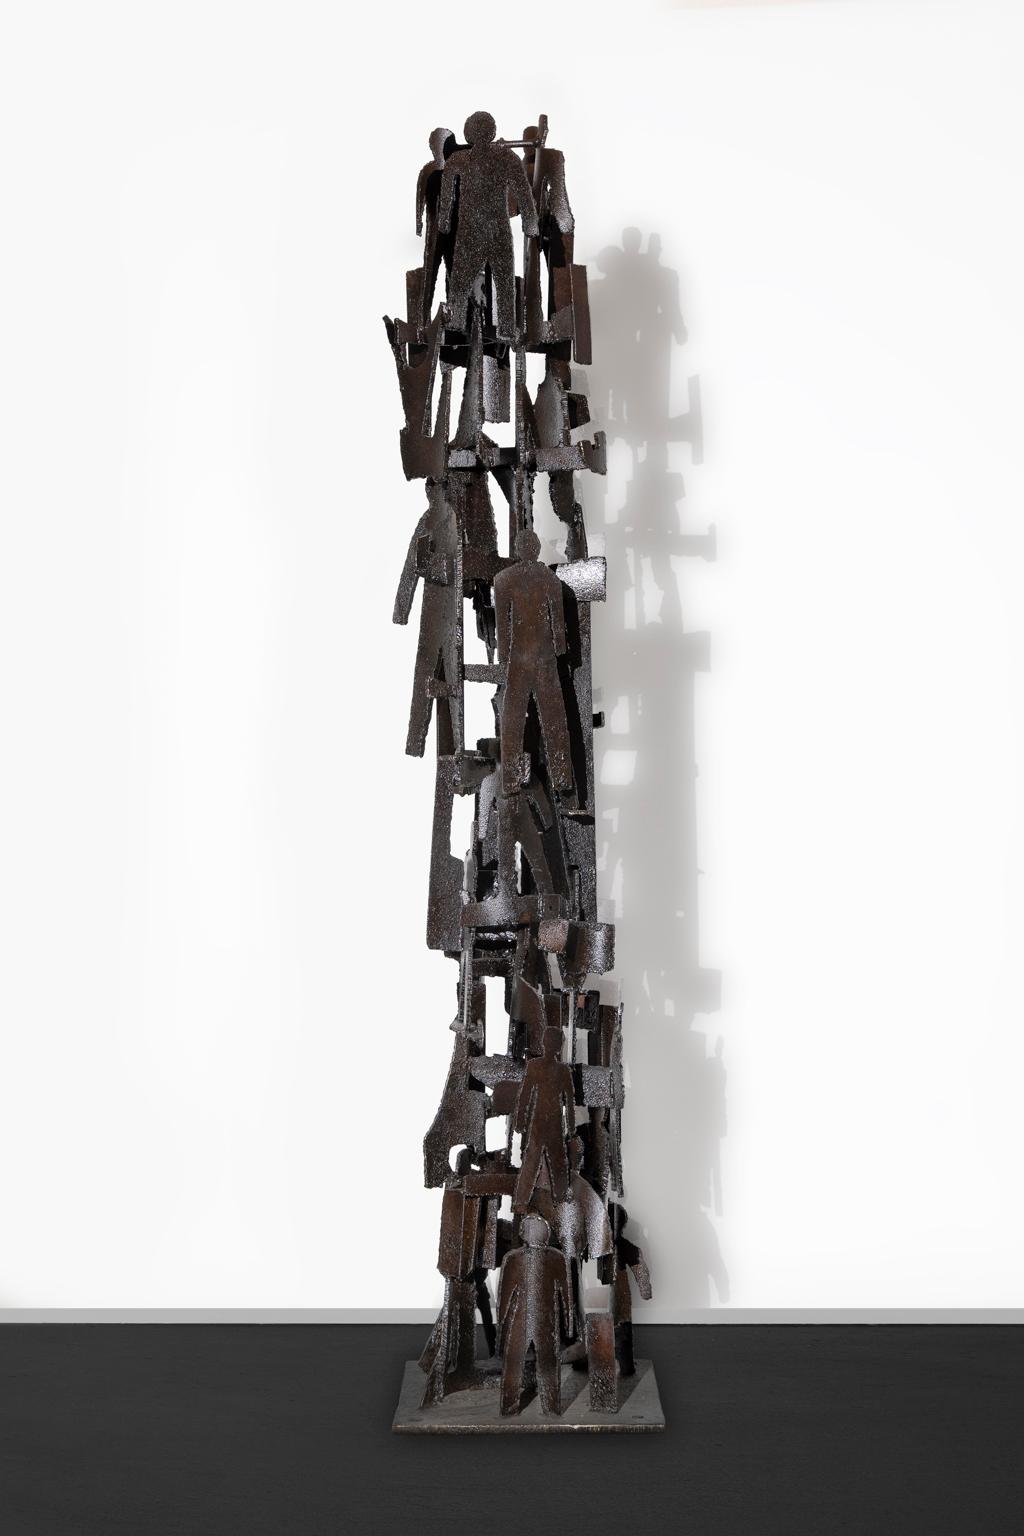 UNTITLED, Abstrakt/Figurative, schwarz geschweißter Stahl, Cass Corridor-Künstler, Detroit – Sculpture von Robert Sestok